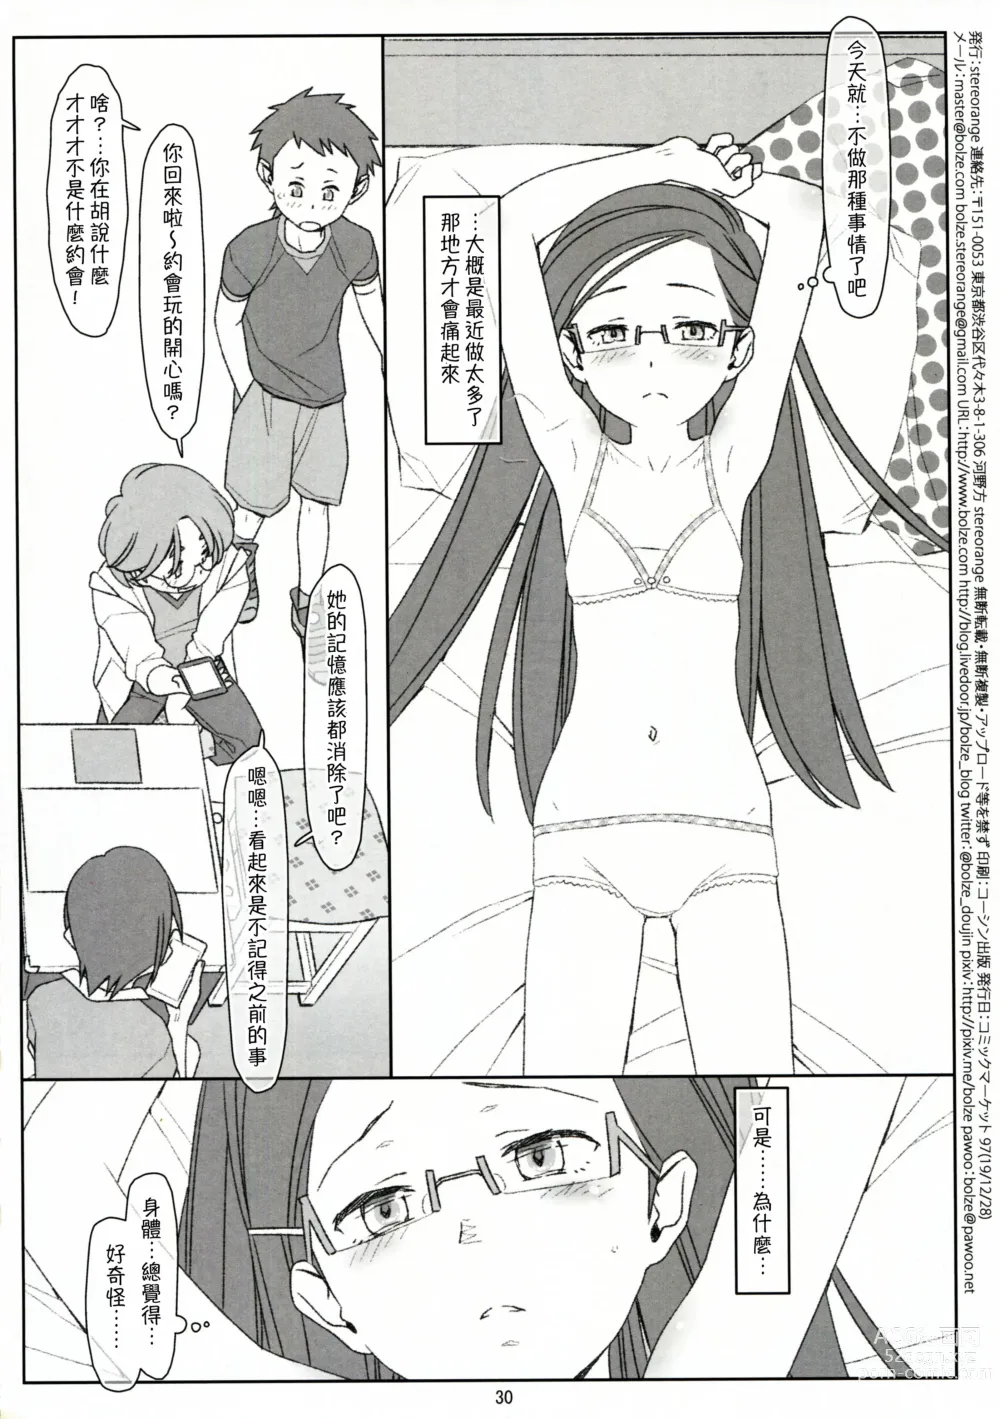 Page 56 of doujinshi Bokutachi no Super App + ②